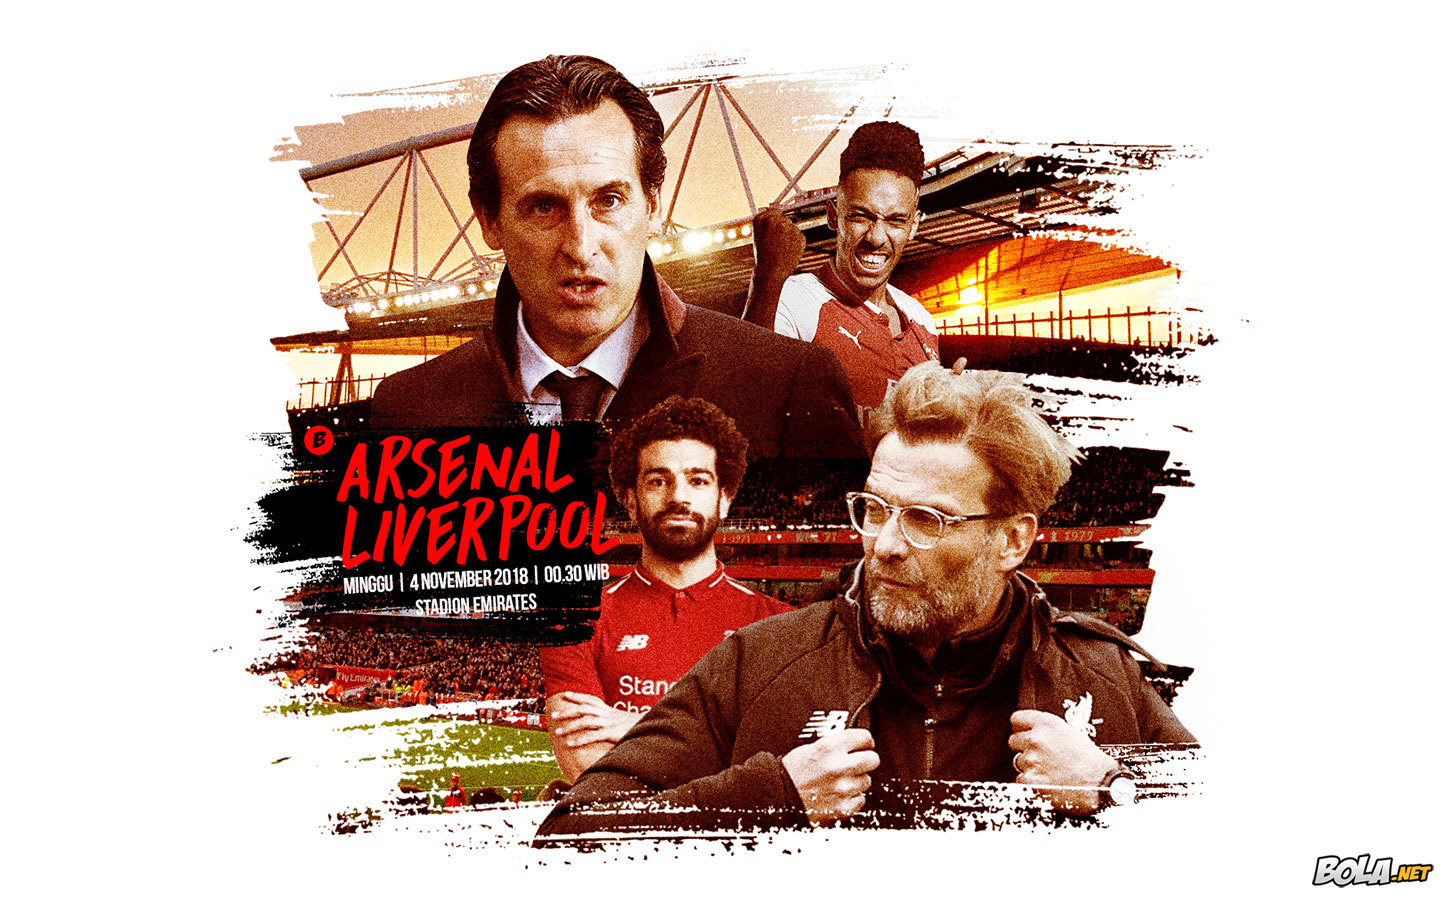 Deskripsi : Wallpaper Arsenal Vs Liverpool, size: 1440x900